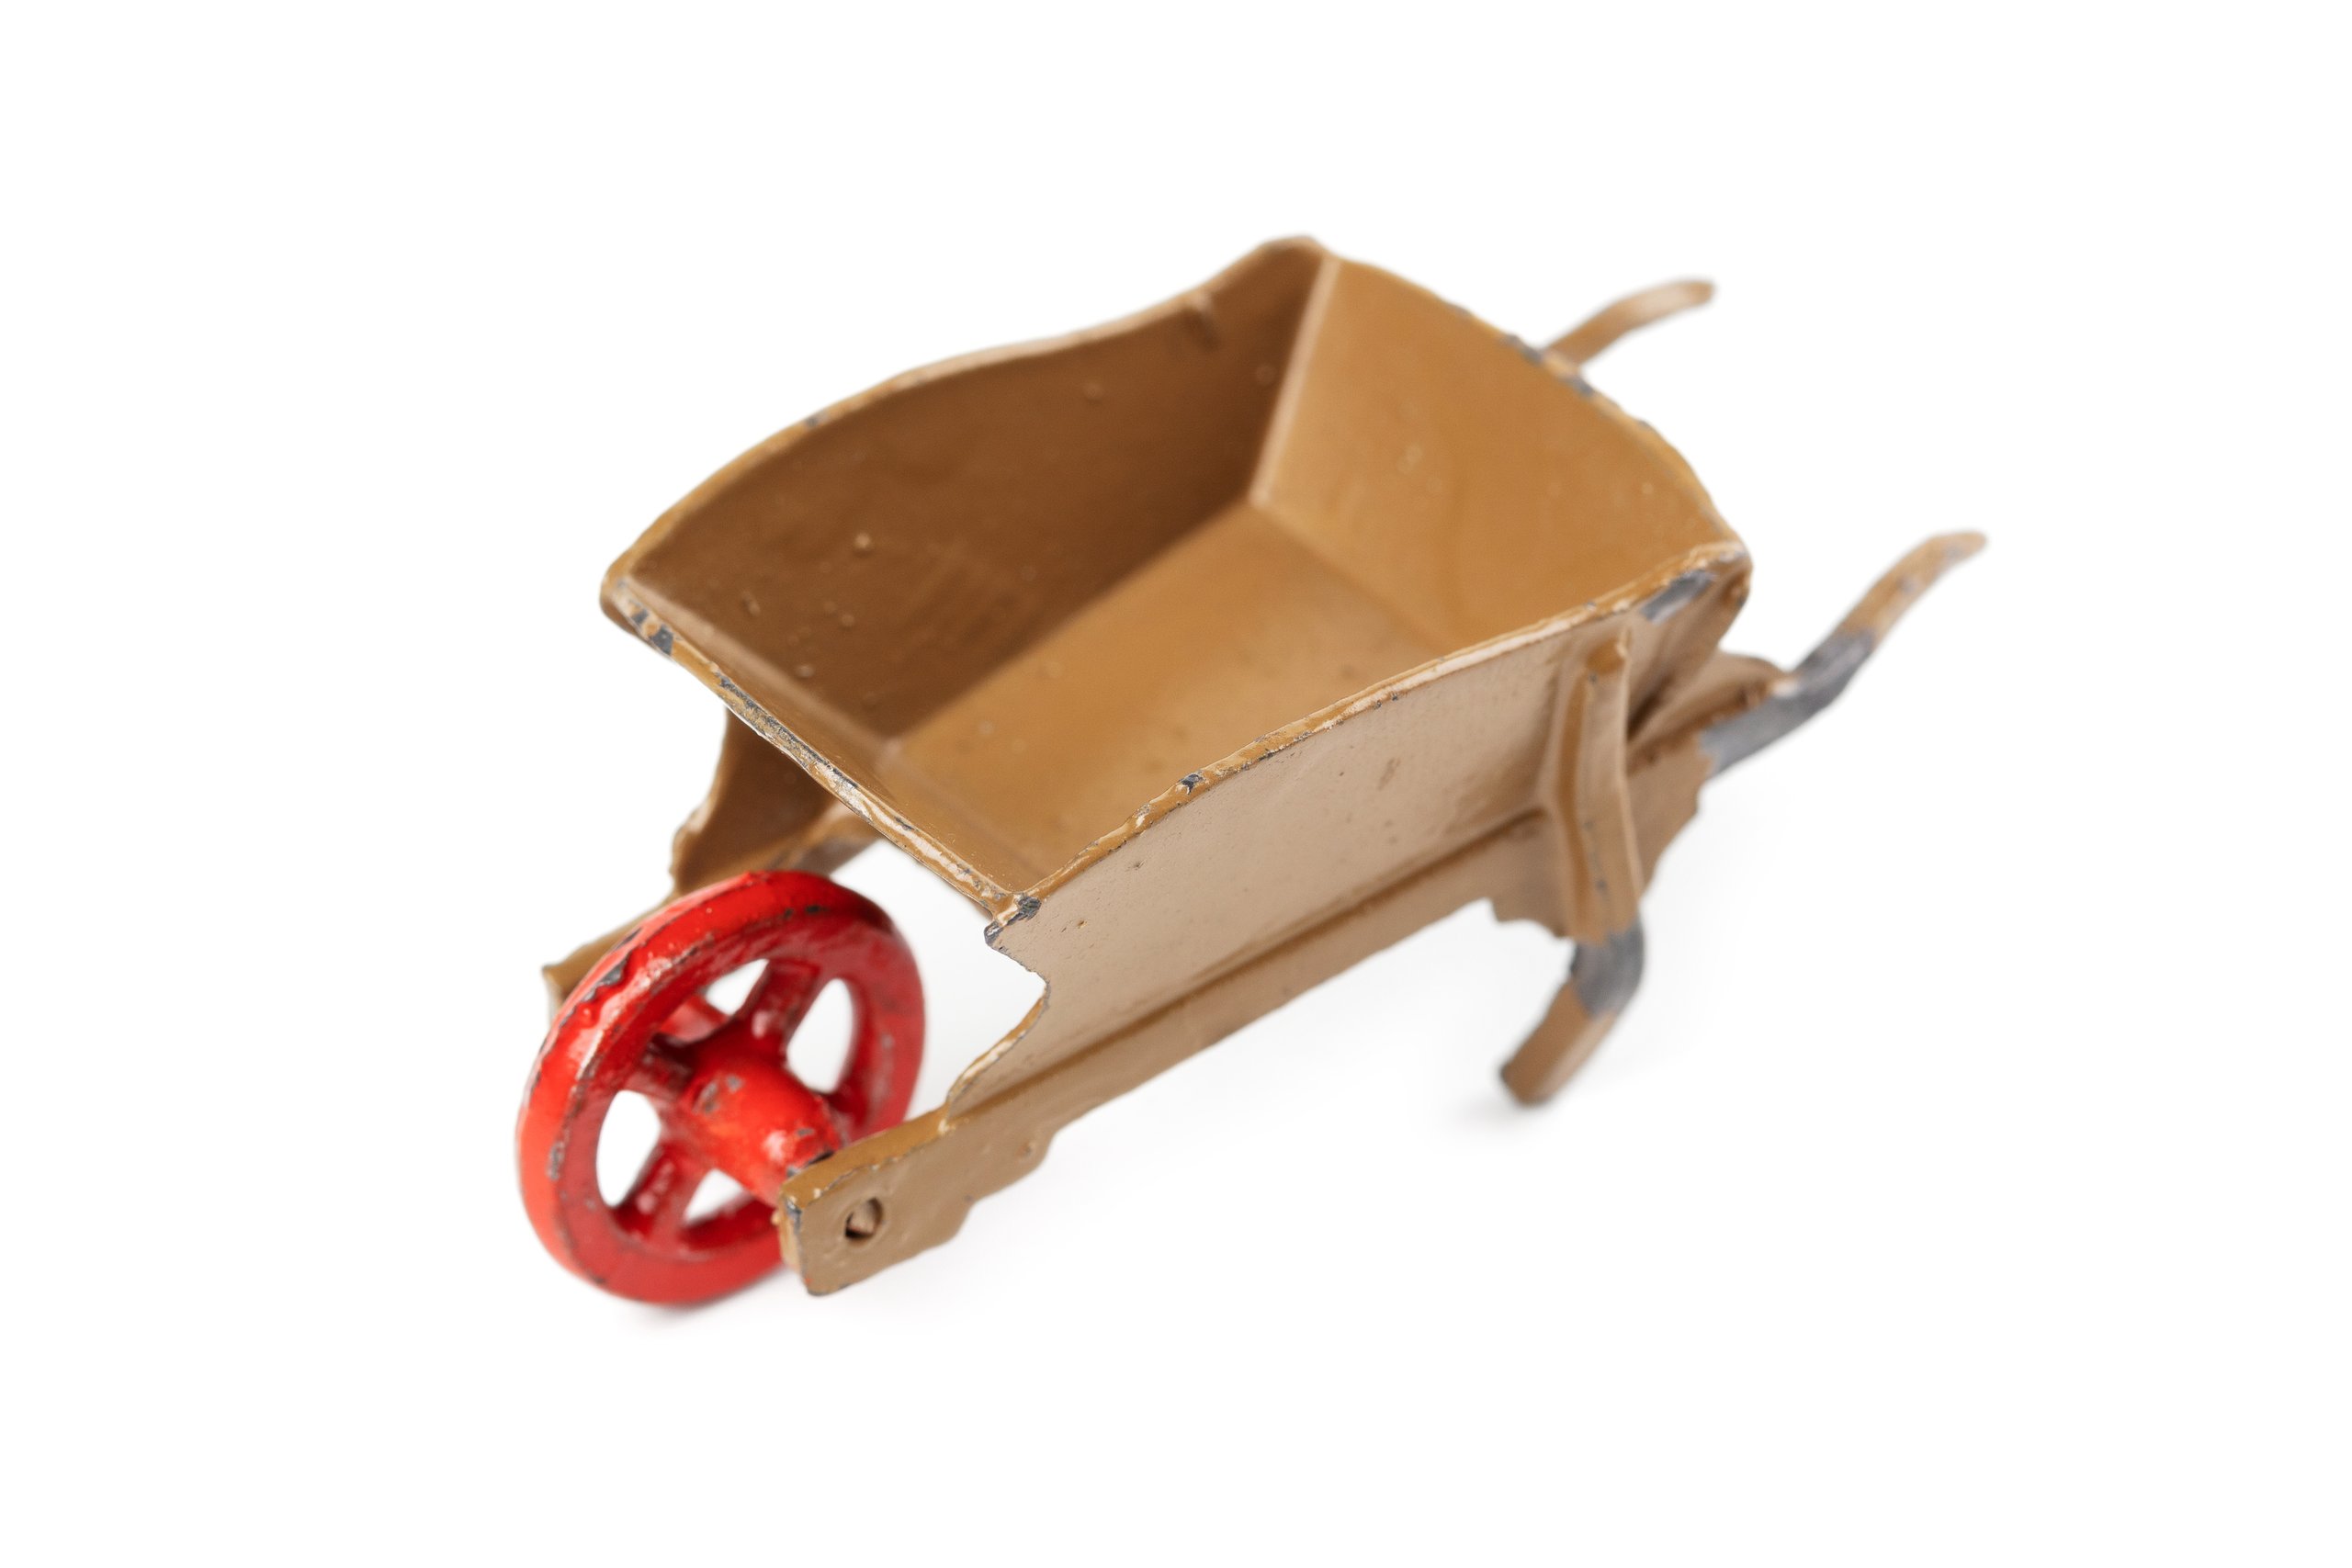 Wheelbarrow from toy farm by W Britain